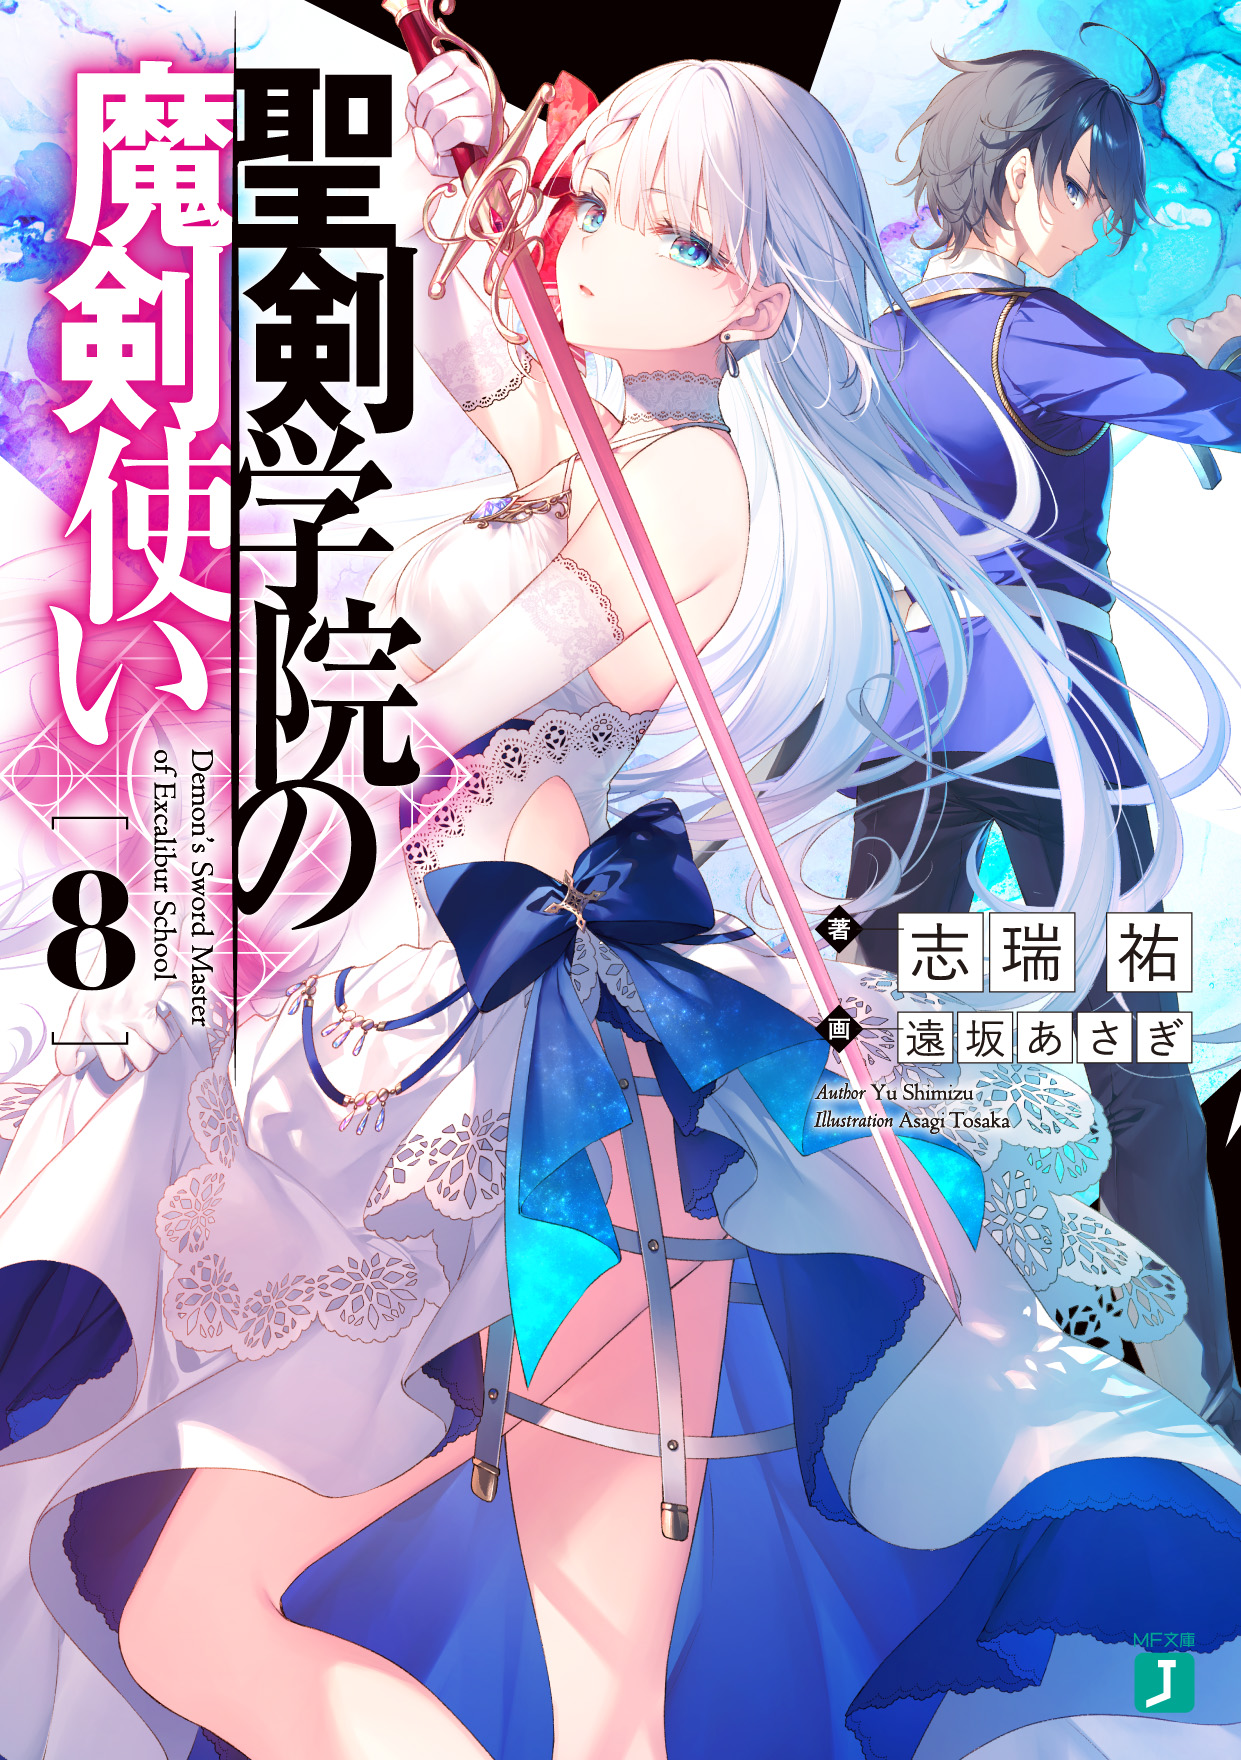 demon school master excalibur anime volume 8 cover